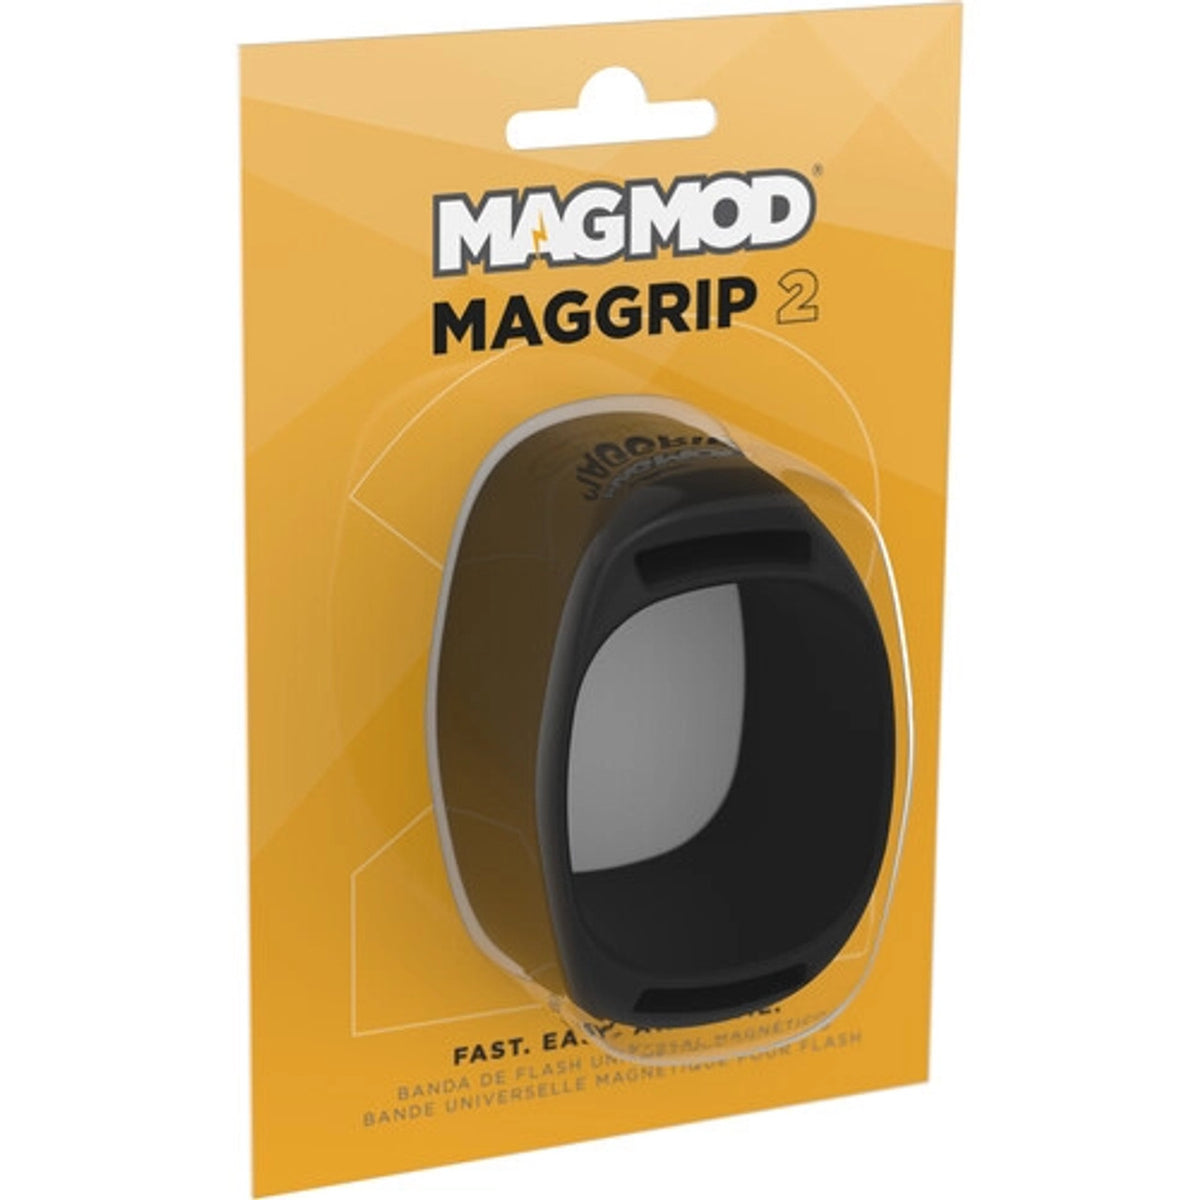 MagMod MagGrip 2 閃光燈磁力快拆底座